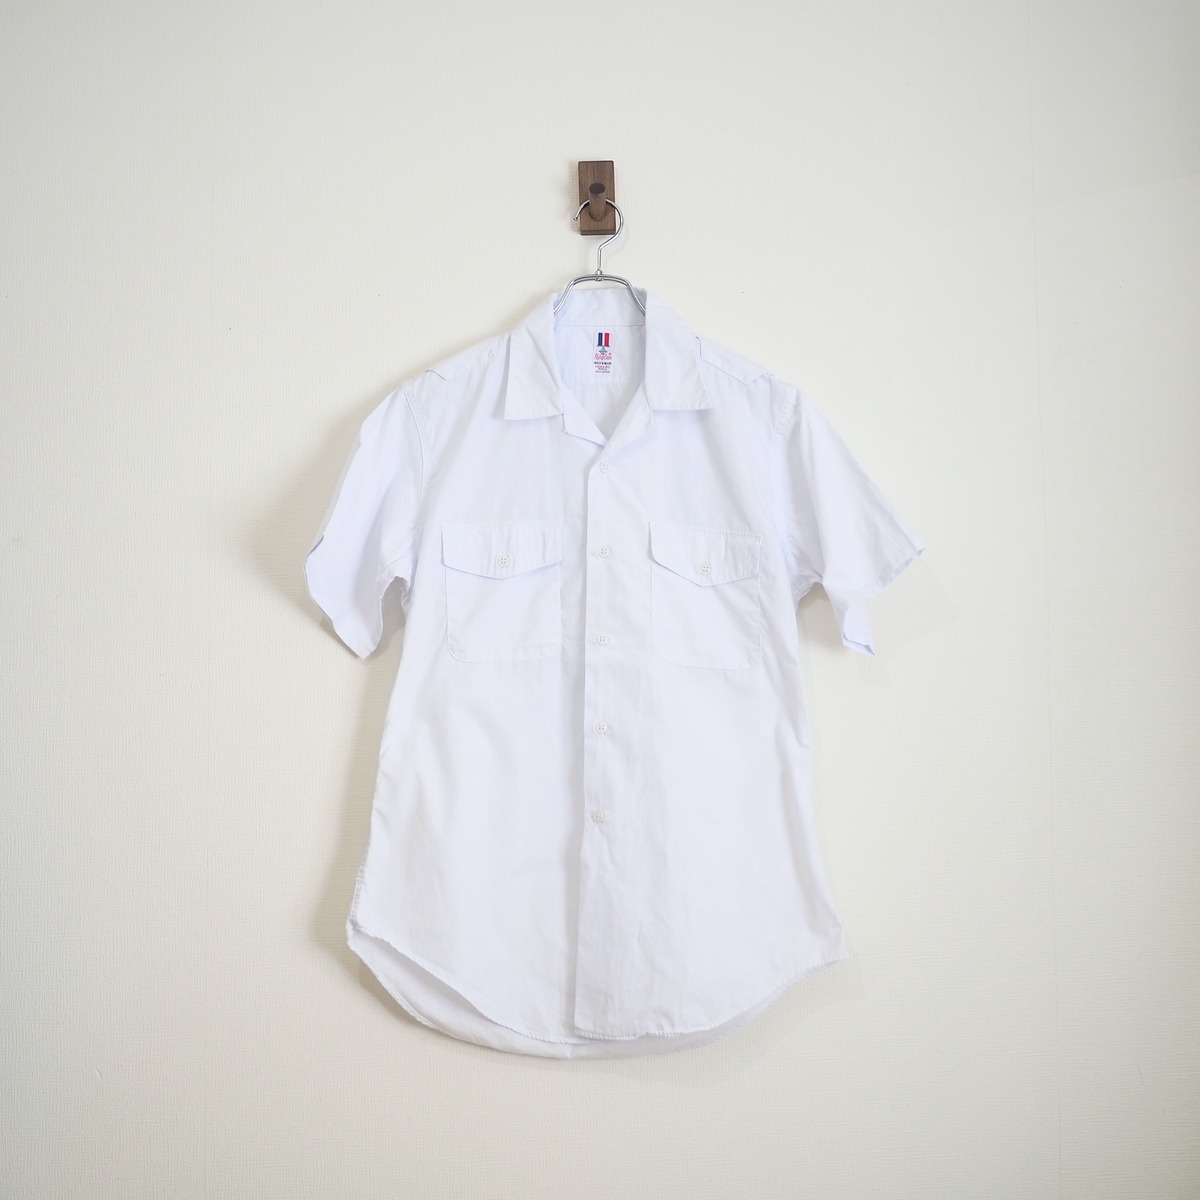 【Flying Cross】Uniform shirt | Rodan